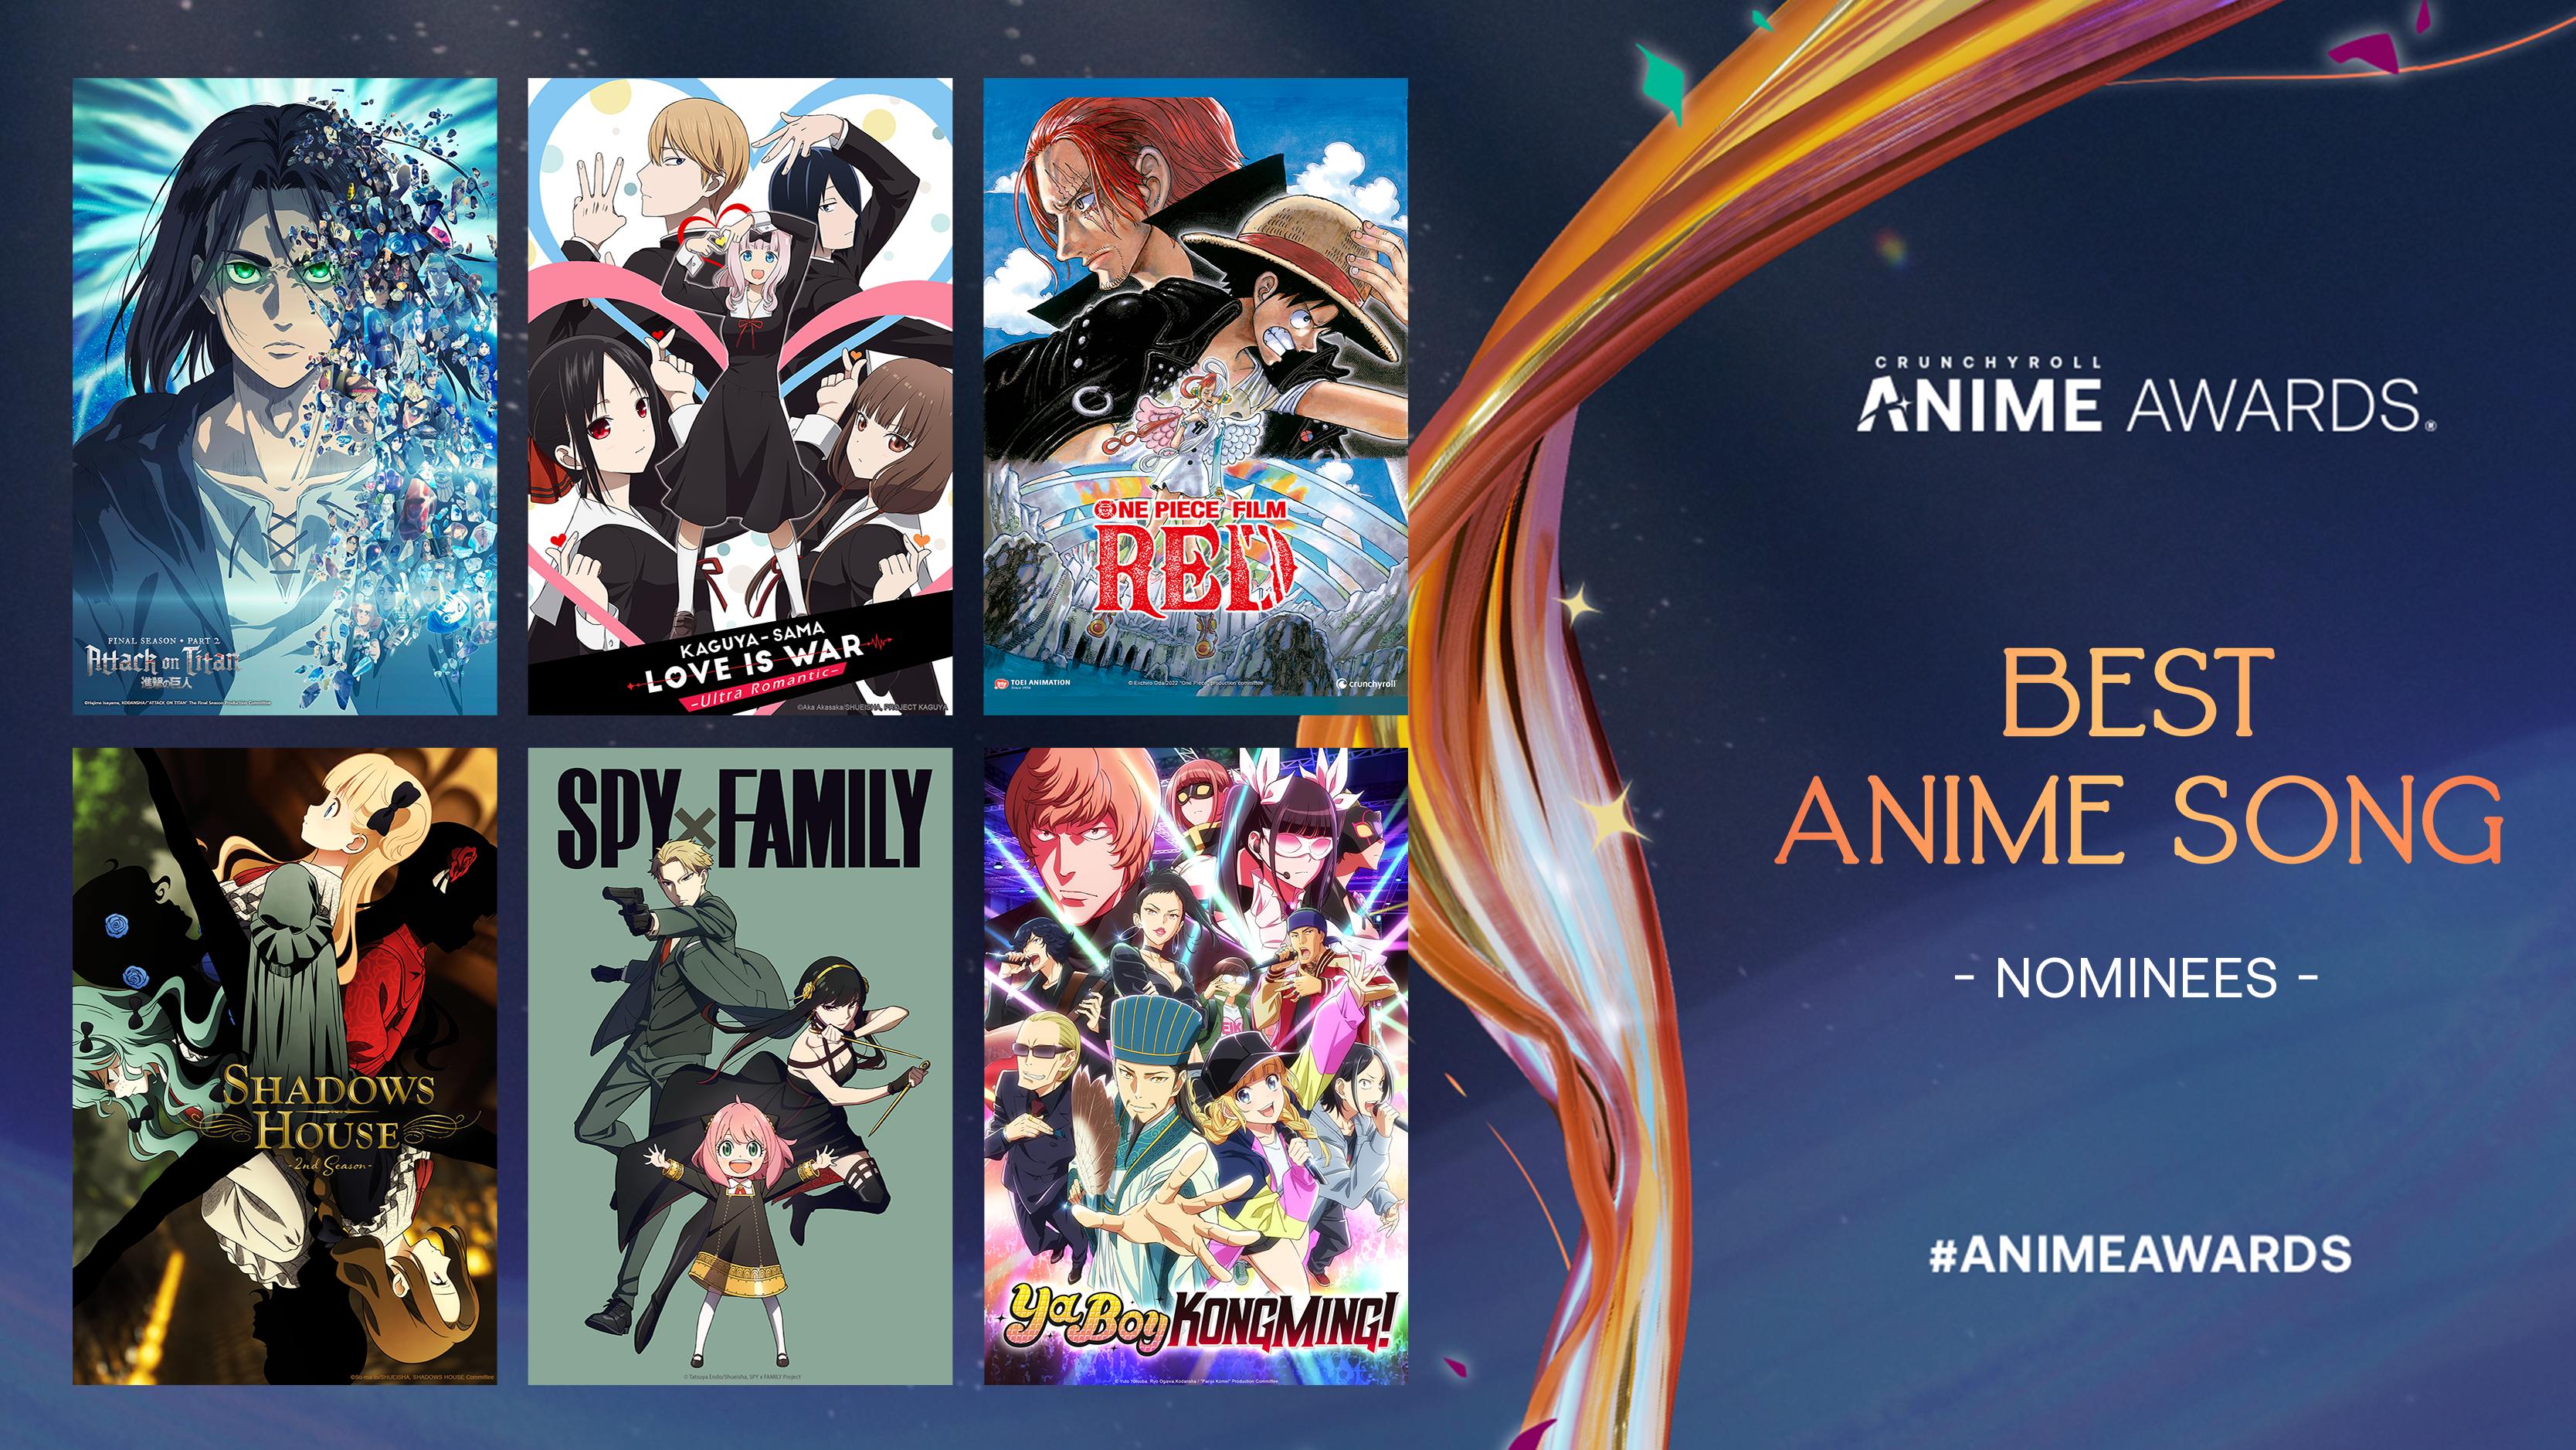 Crunchyroll Anime Awards 2023